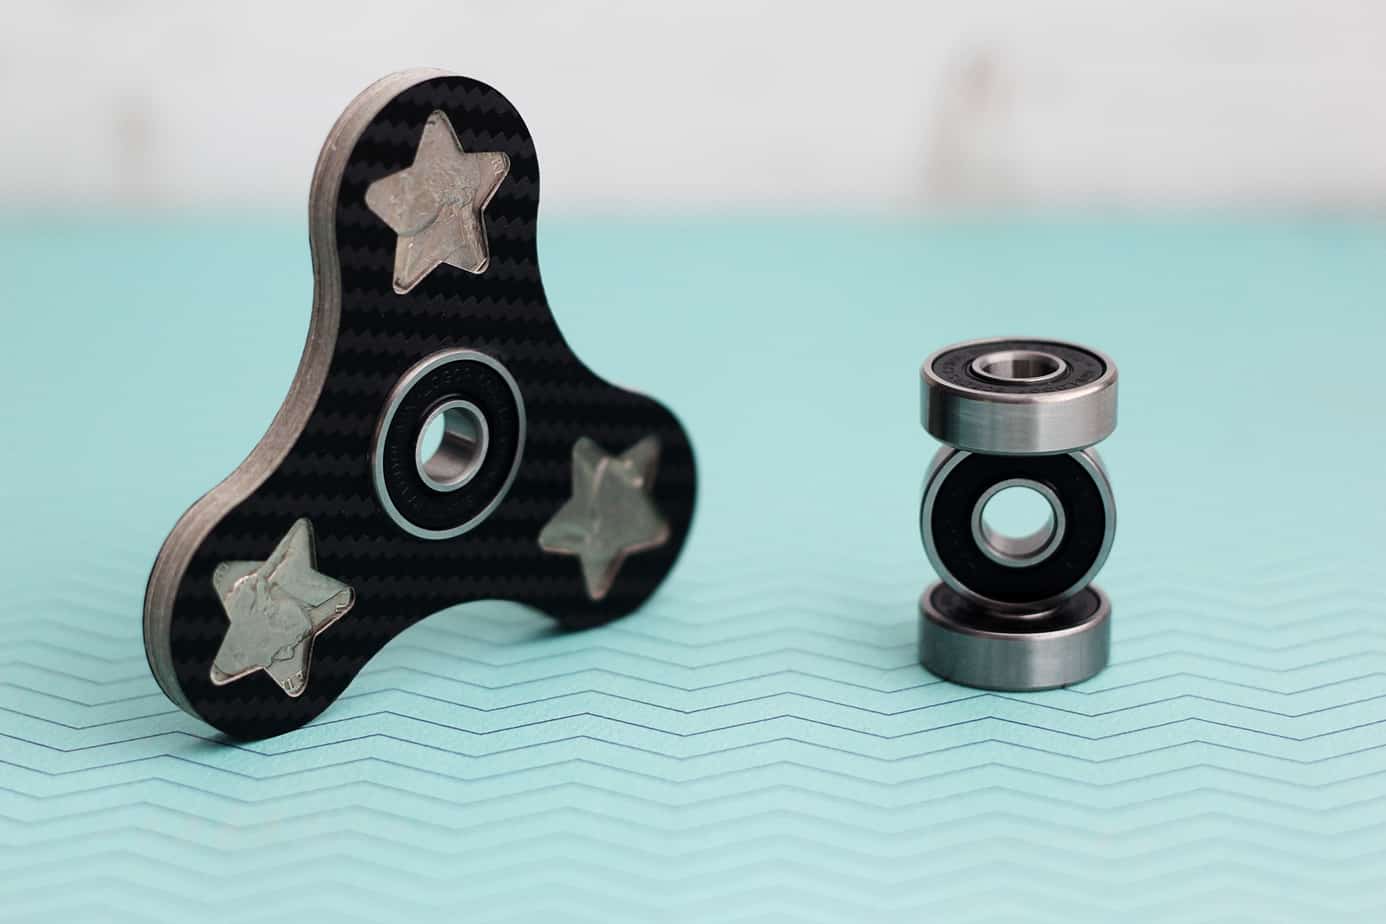 Make Sensational Fidget Spinners for Summertime Fun - Finding Time